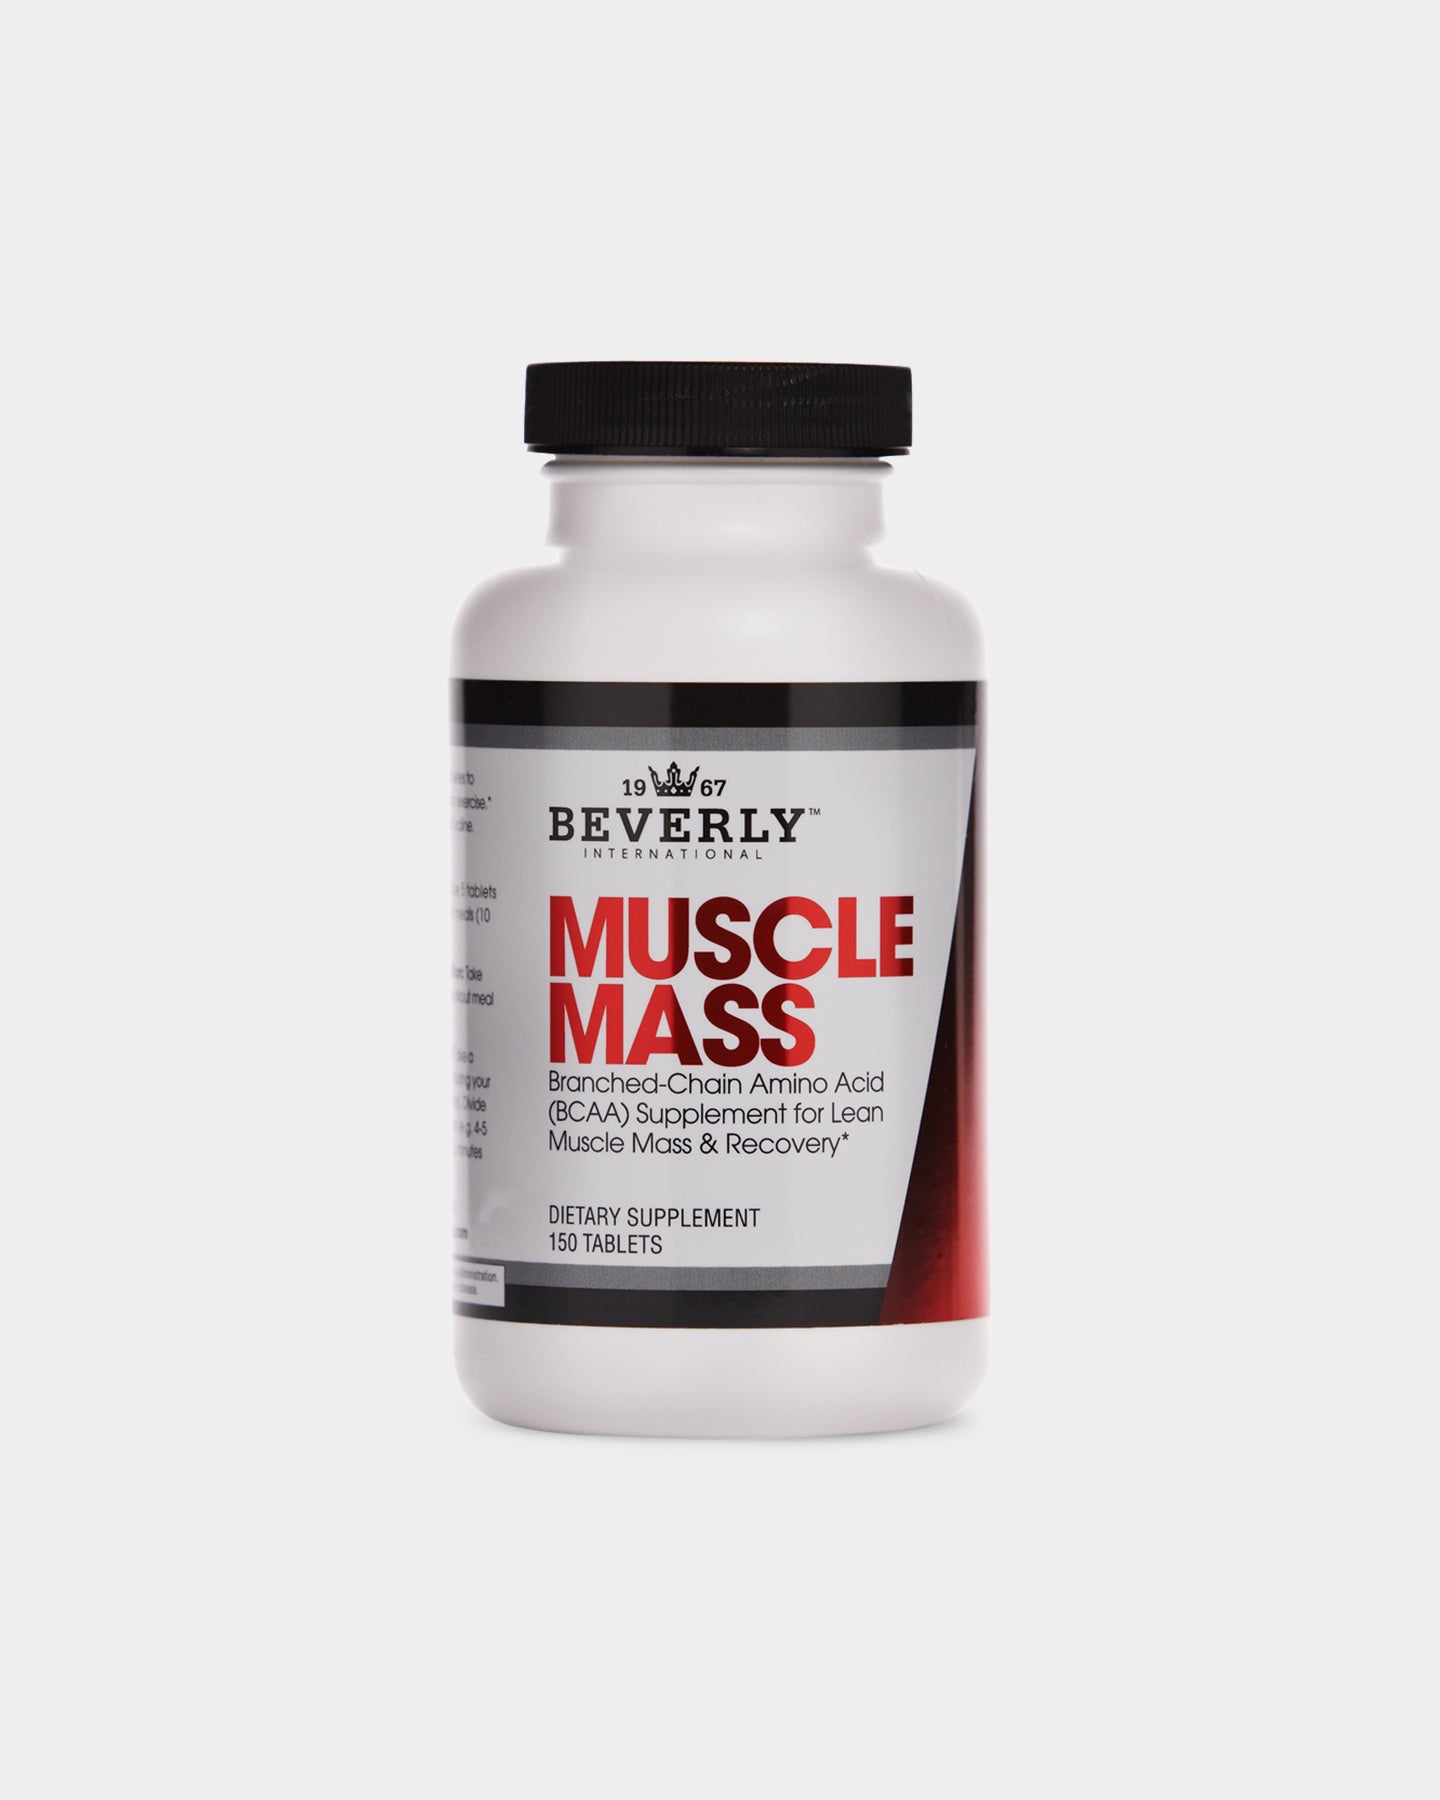 Image of Beverly International Muscle Mass BCAAs